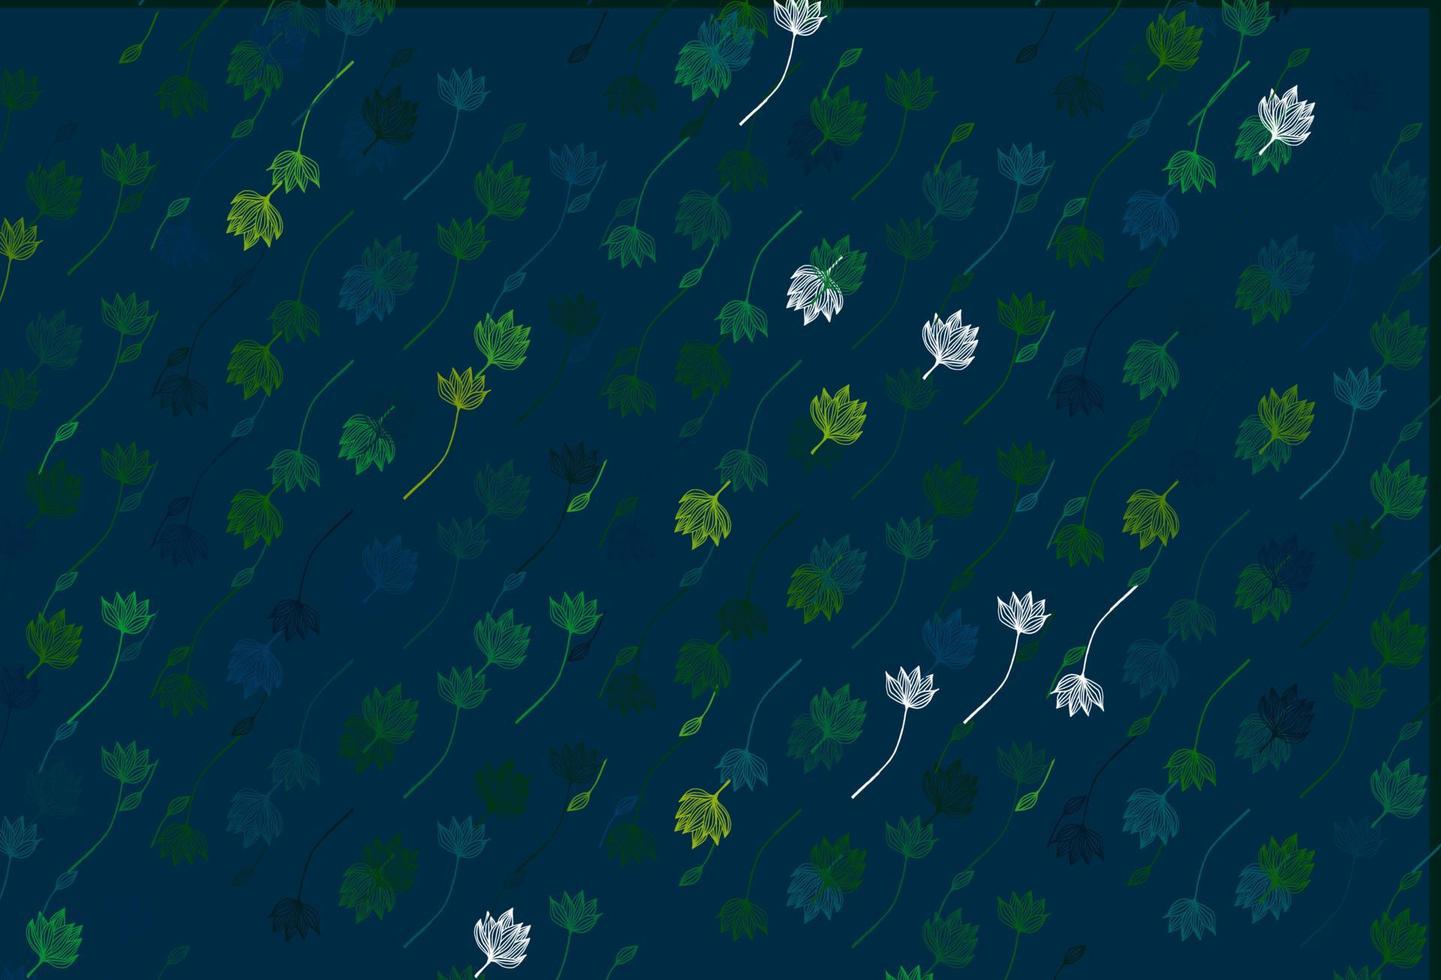 copertina di doodle vettoriale azzurro e verde.